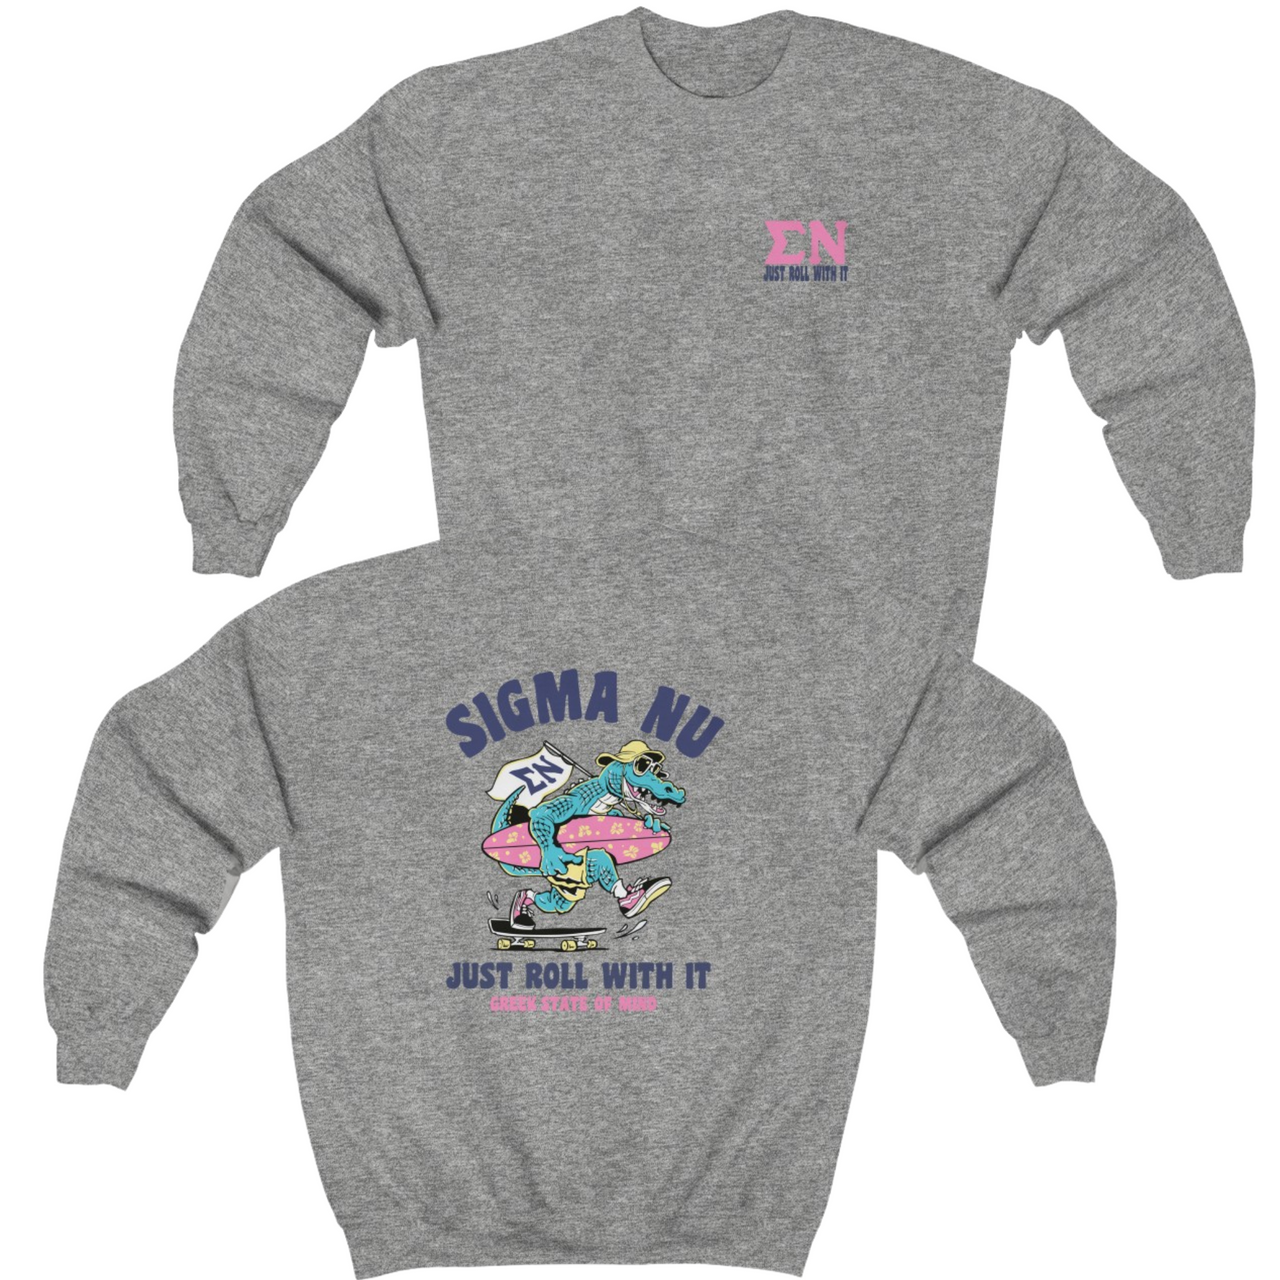 Grey Sigma Nu Graphic Crewneck Sweatshirt | Alligator Skater | Sigma Nu Clothing, Apparel and Merchandise